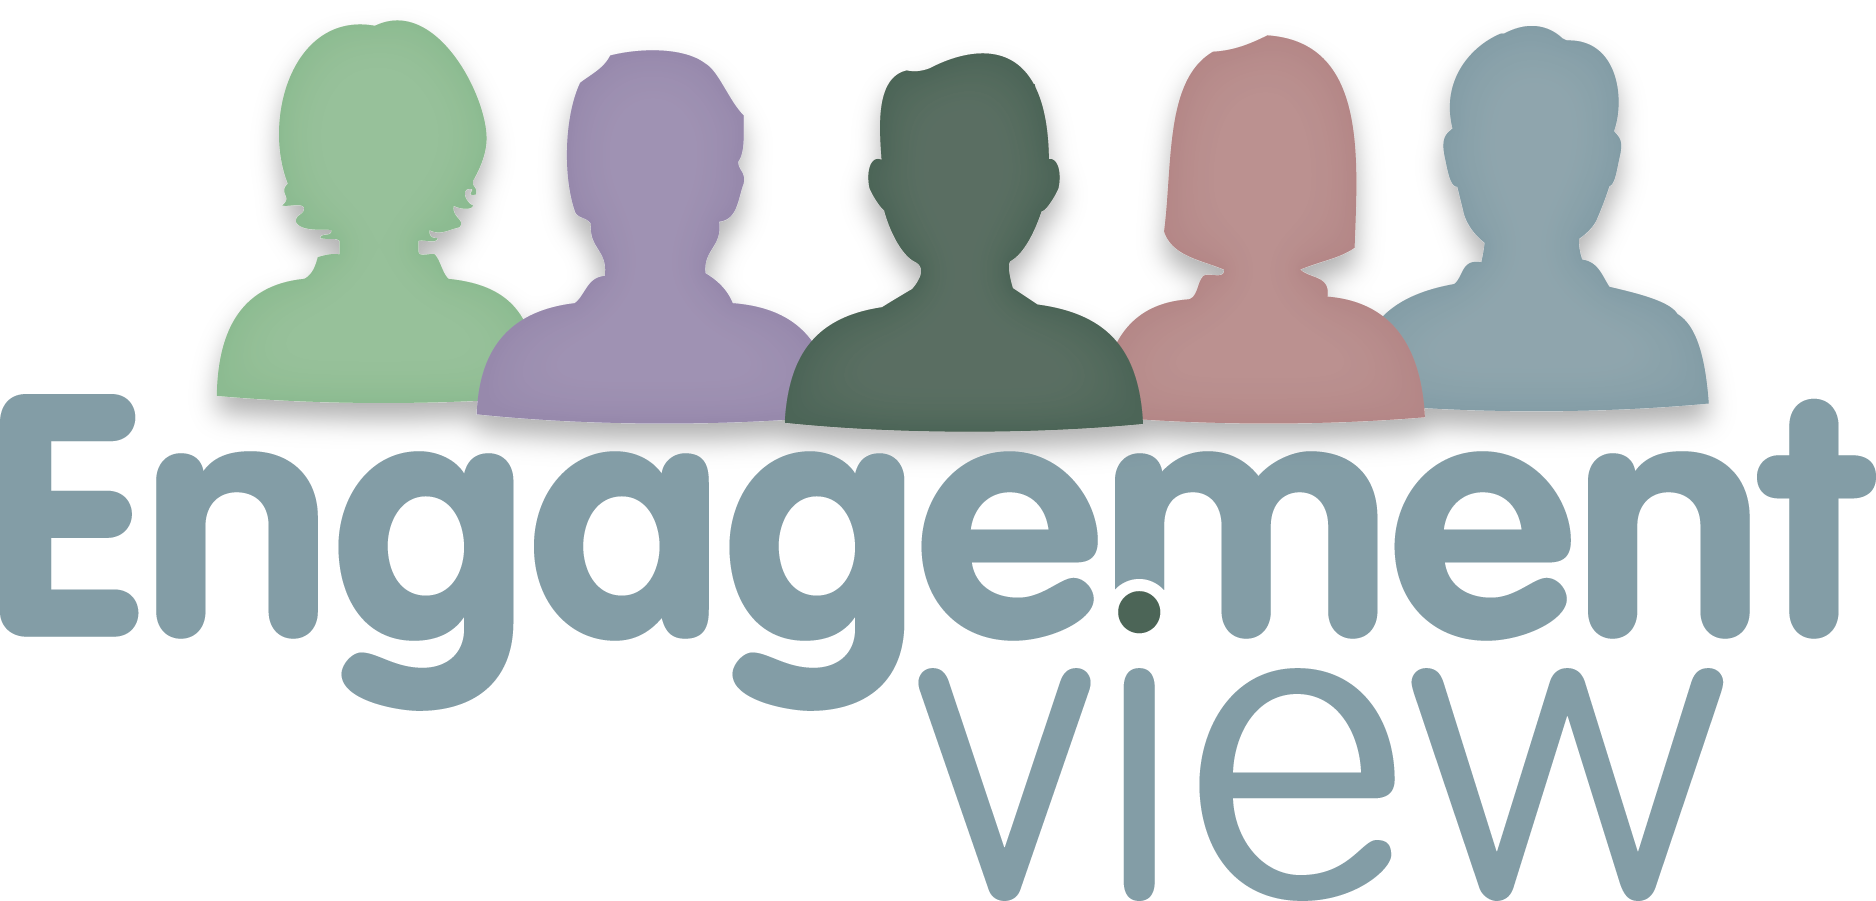 Engagement View logo